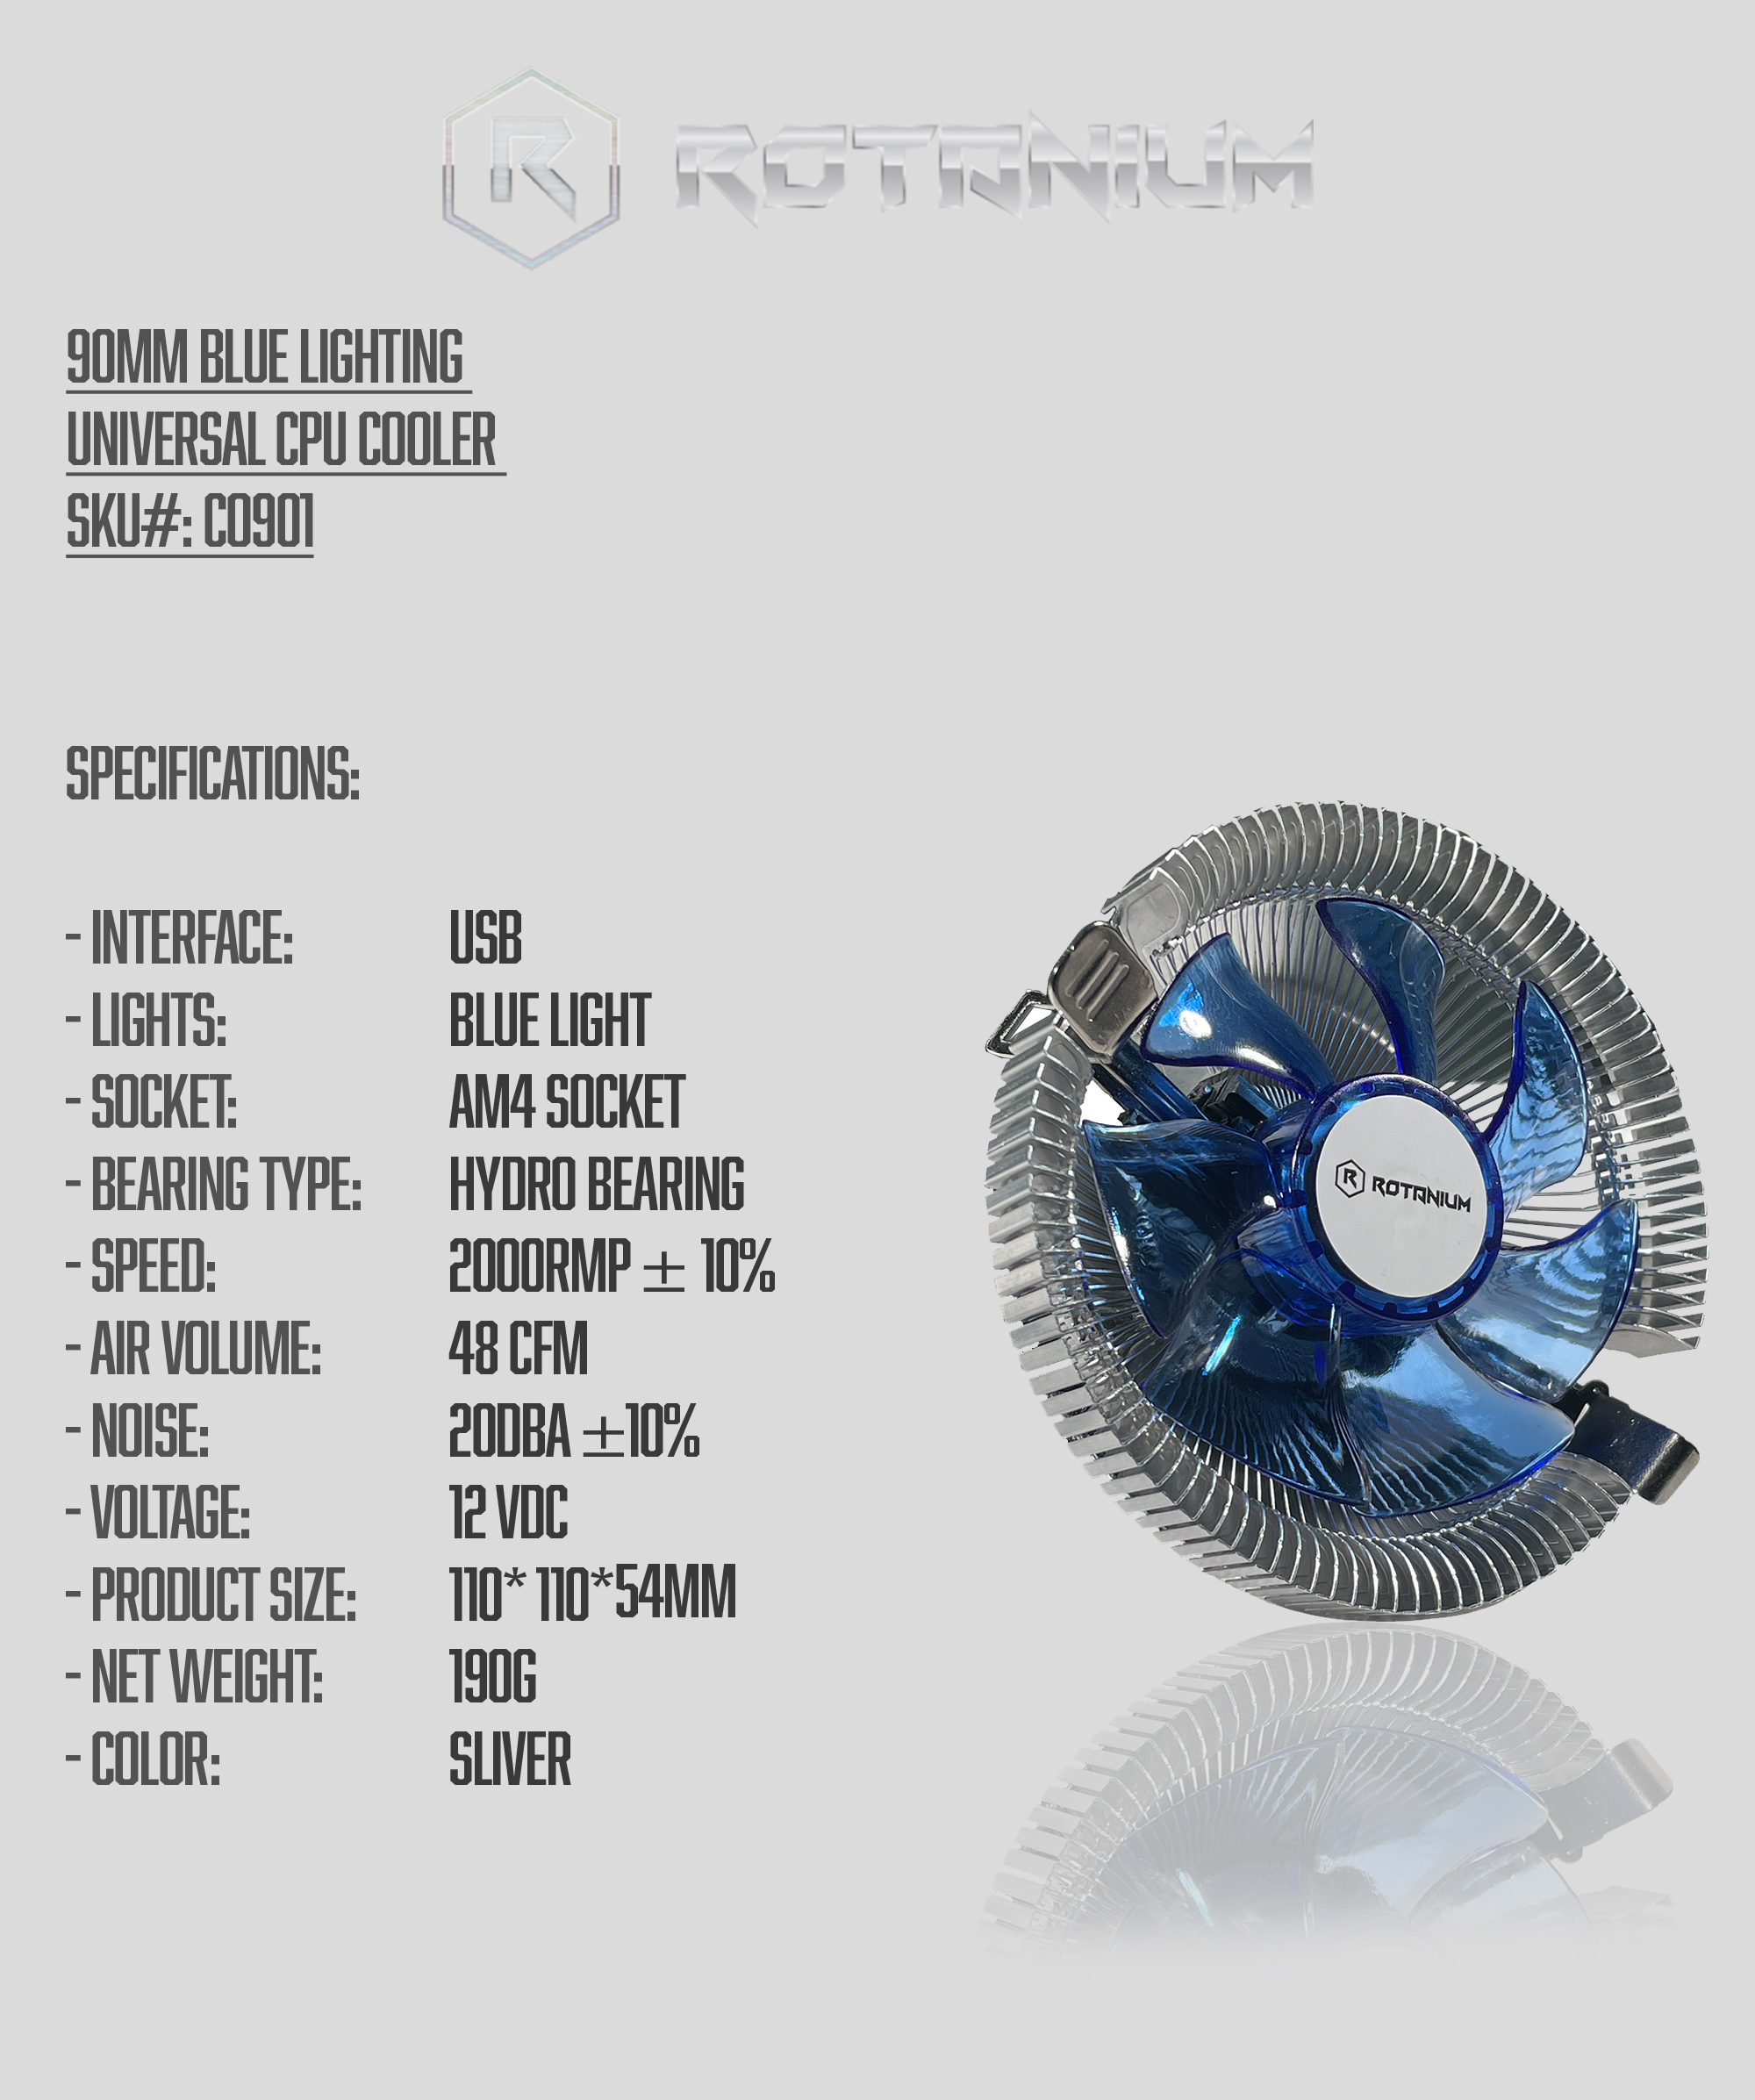 Fishing-Reels-Rotanium-CC0901-90mm-9cm-Blue-Lighting-Universal-CPU-Cooler-1